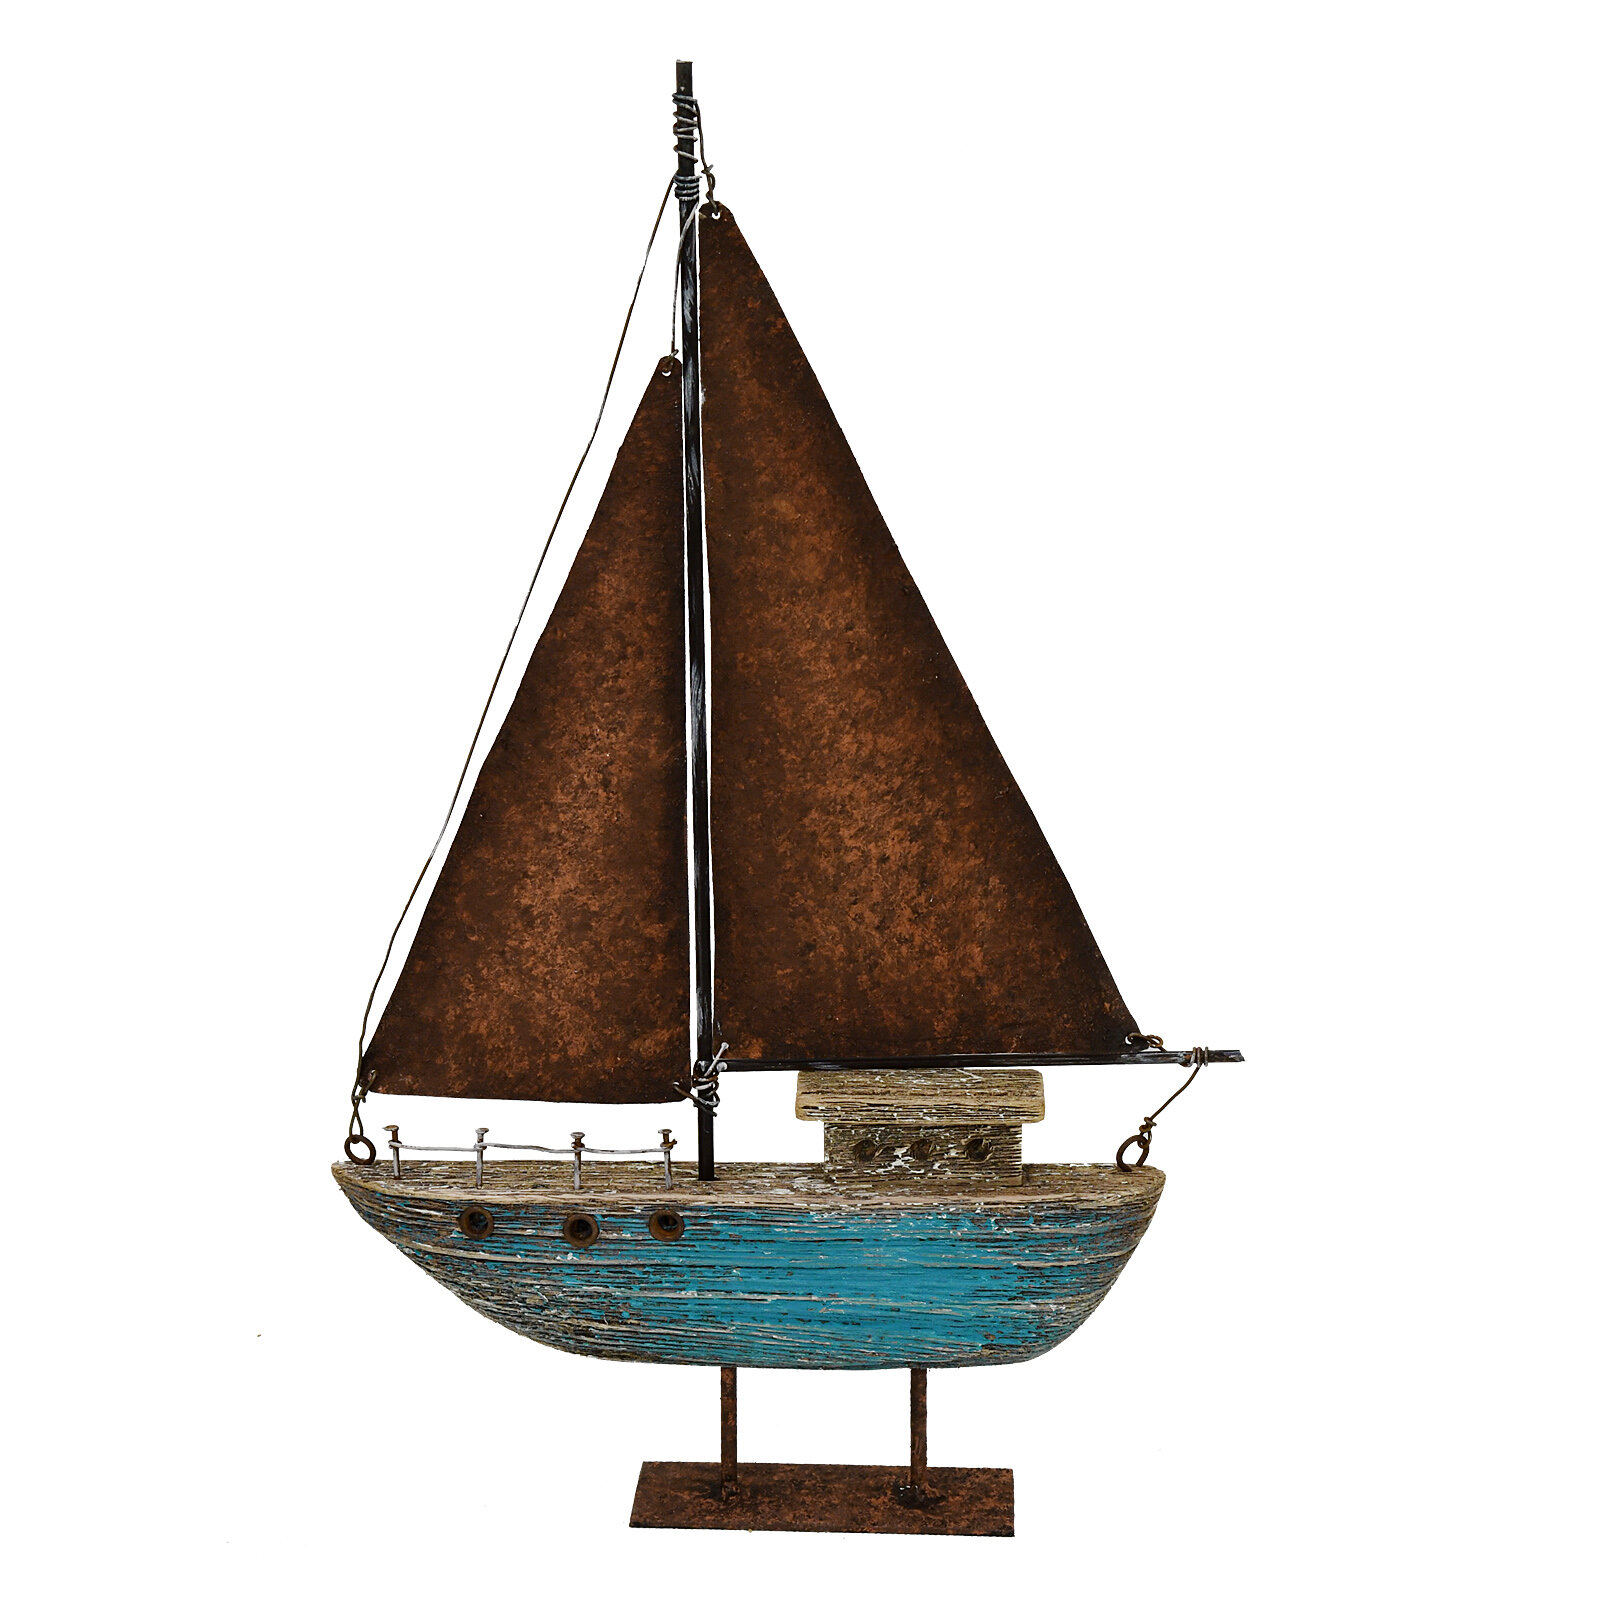 Details about   Super Decoration home wooden Sailboat model boat decor Sailing Boats gift 